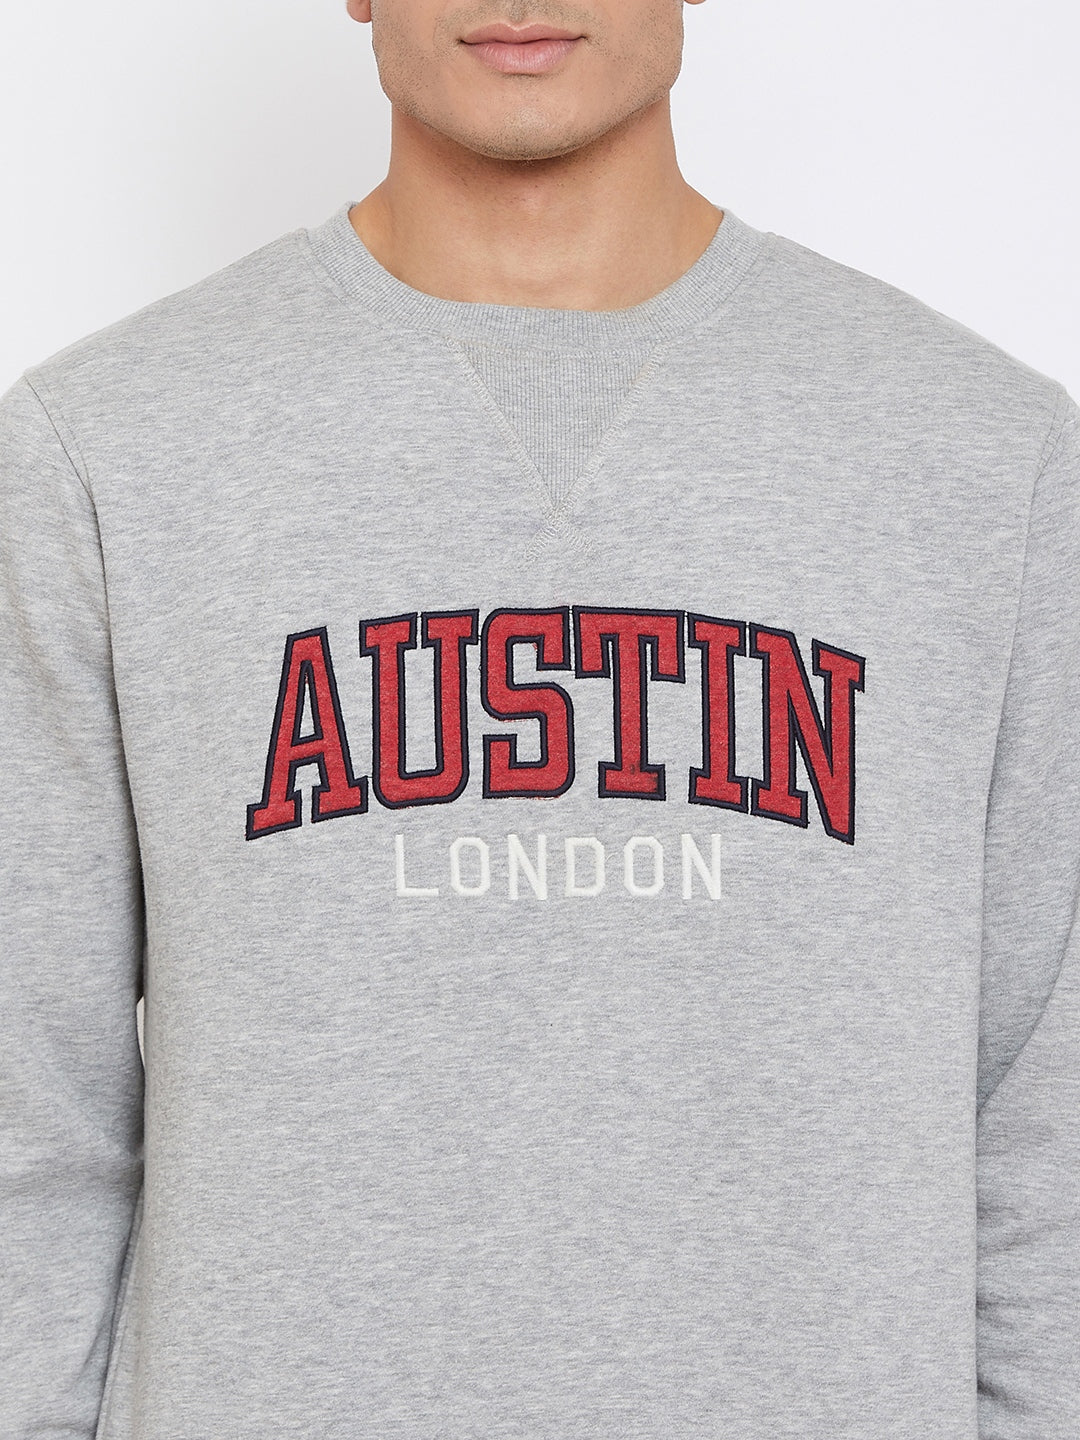 Austin Wood Men's Grey Full Sleeves Solid Round Neck Sweatshirt